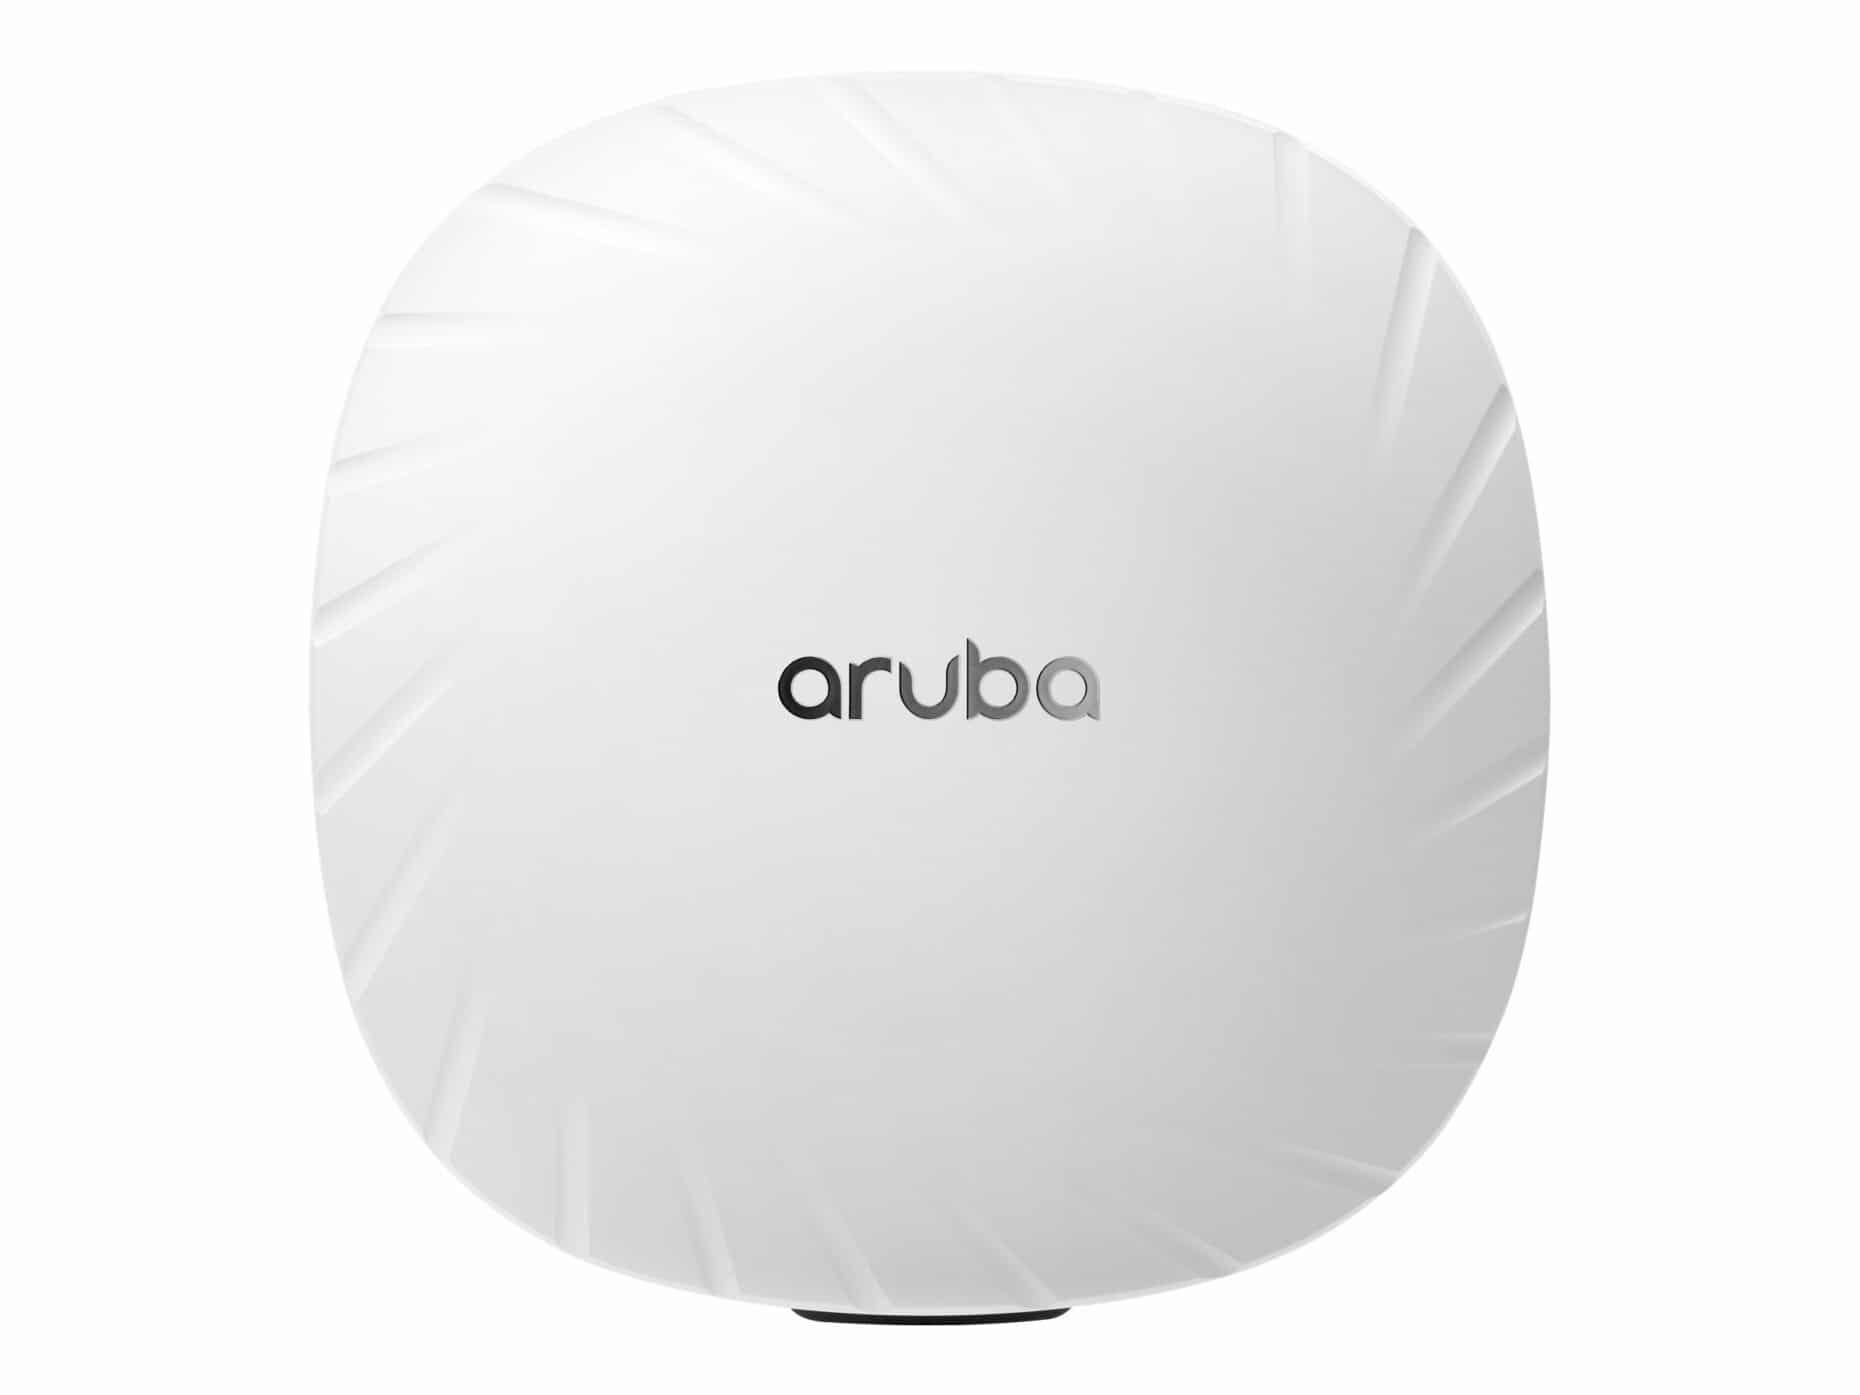 HPE Aruba AP-555 (US) - Campus - ZigBee, Bluetooth, Wi-Fi - Dual Band - in-ceiling - Wireless Access Point